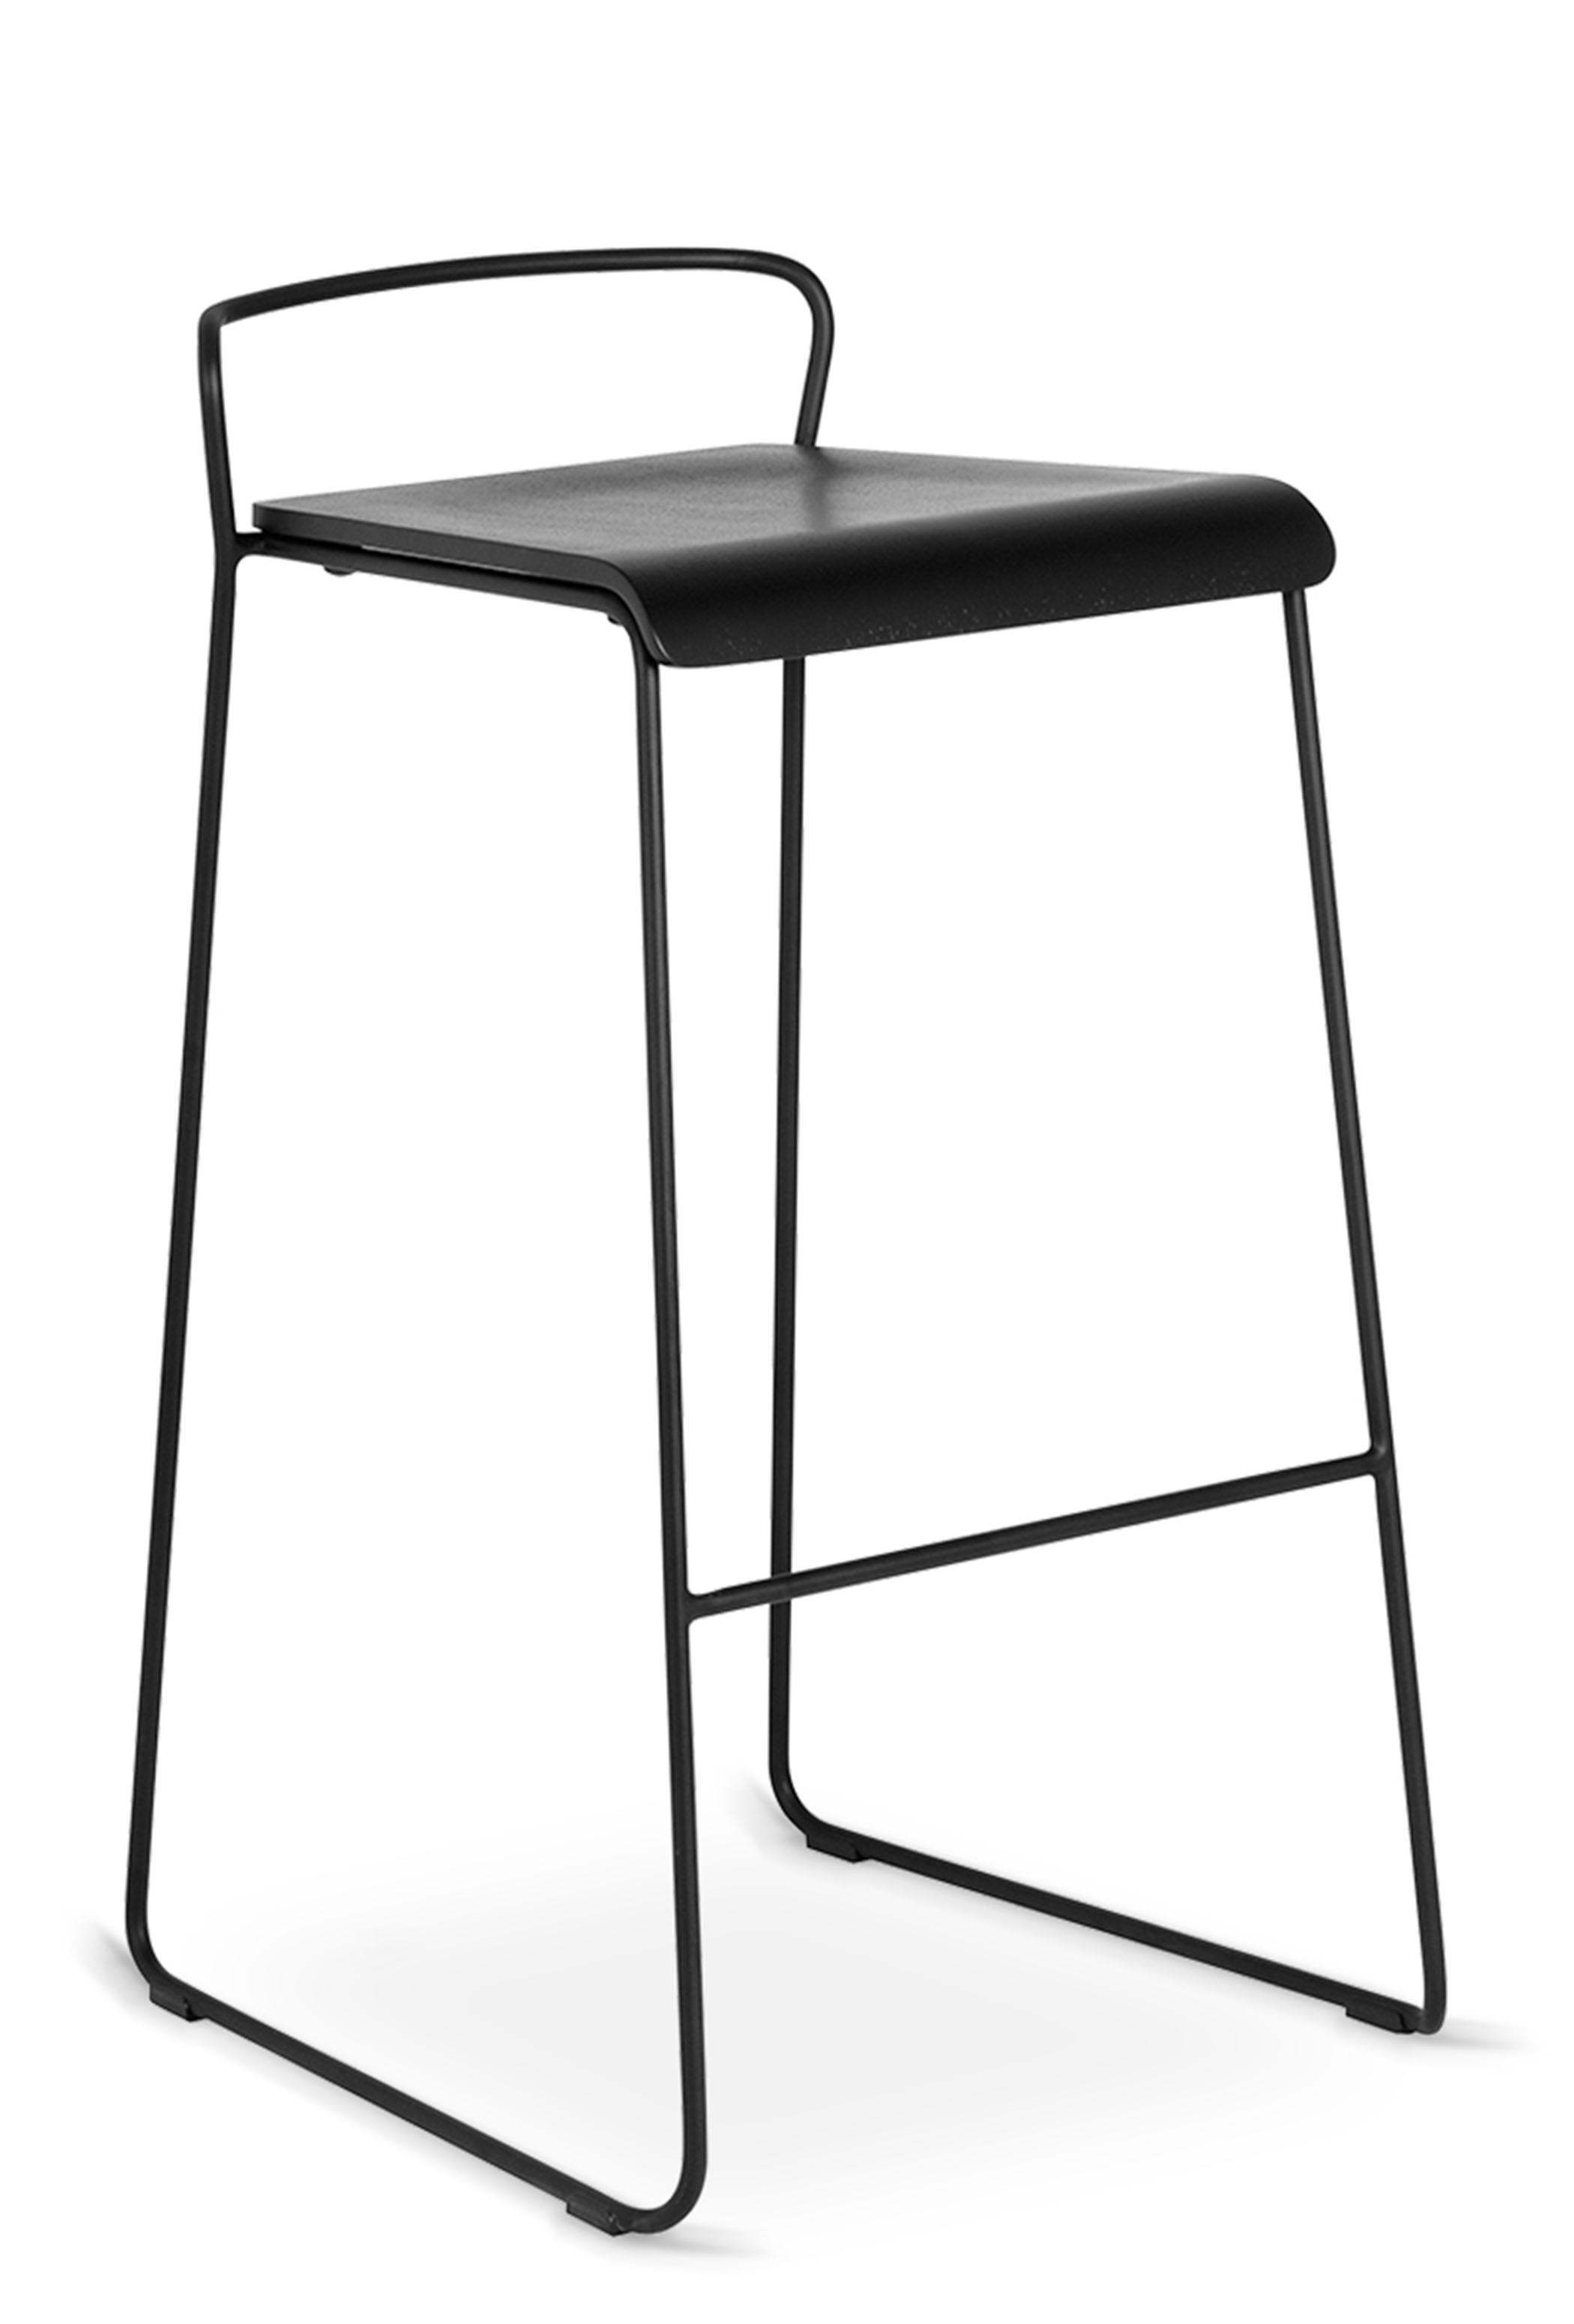 WS - Transit high stool - Black ash (Front angle)